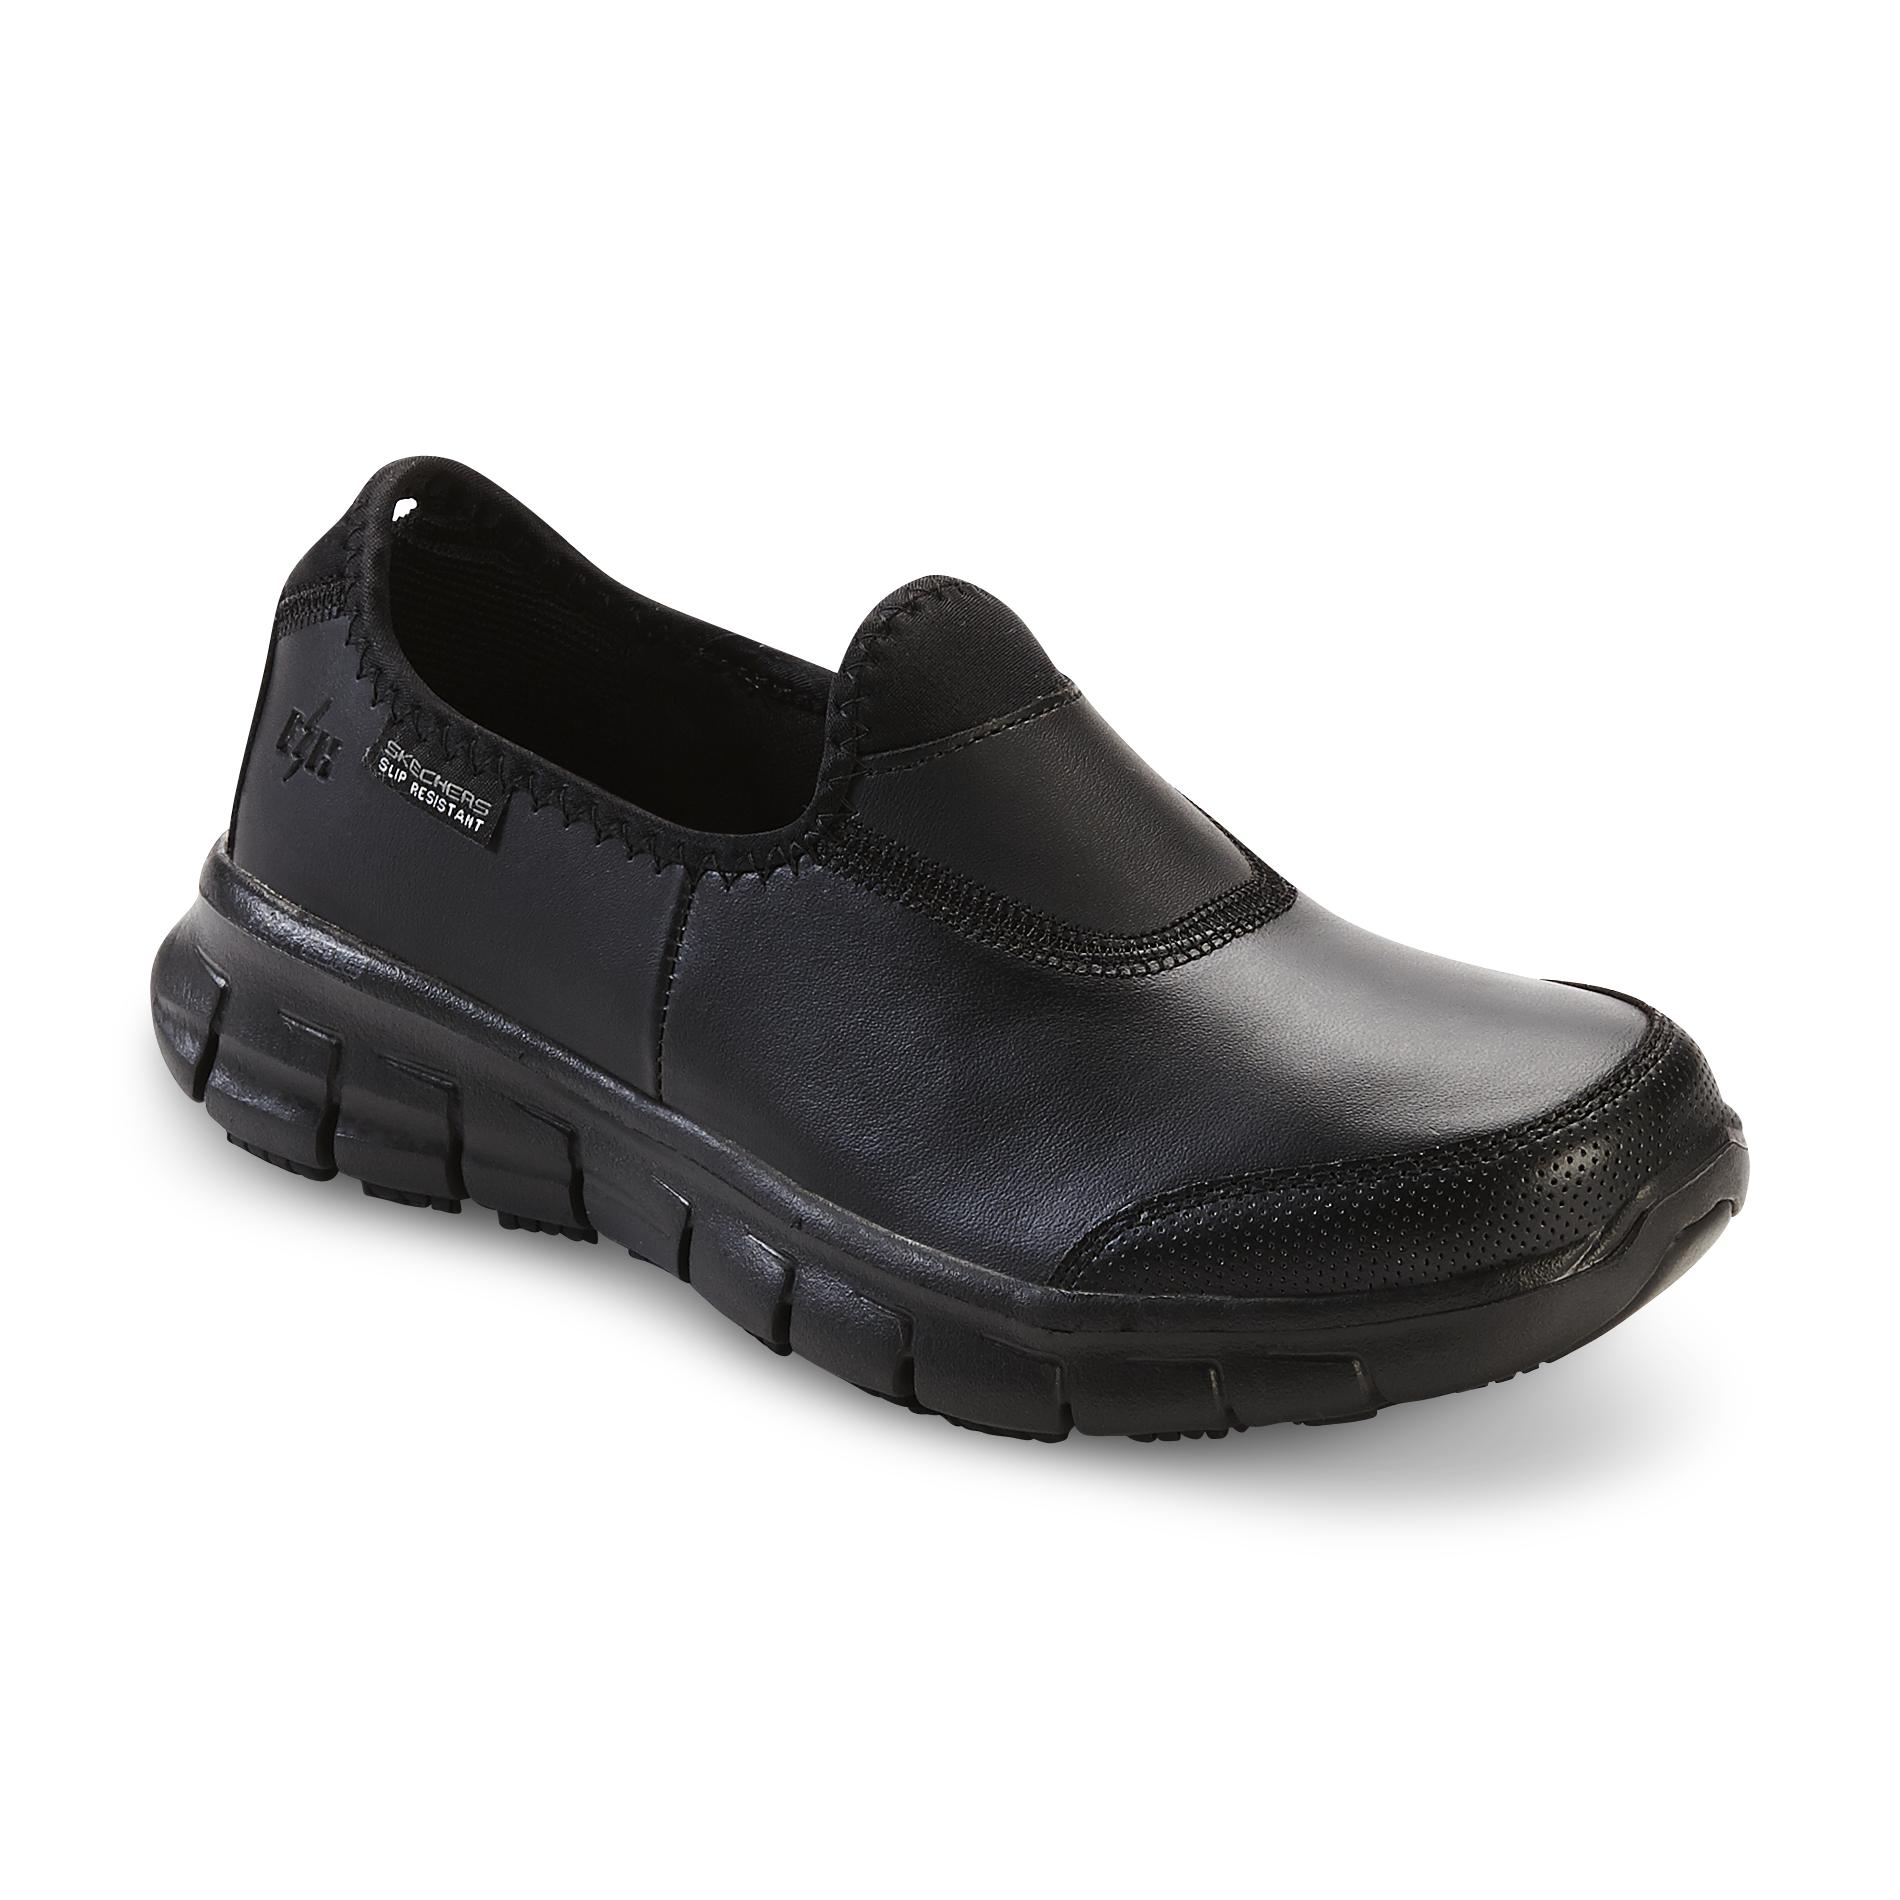 waterproof skechers shoes